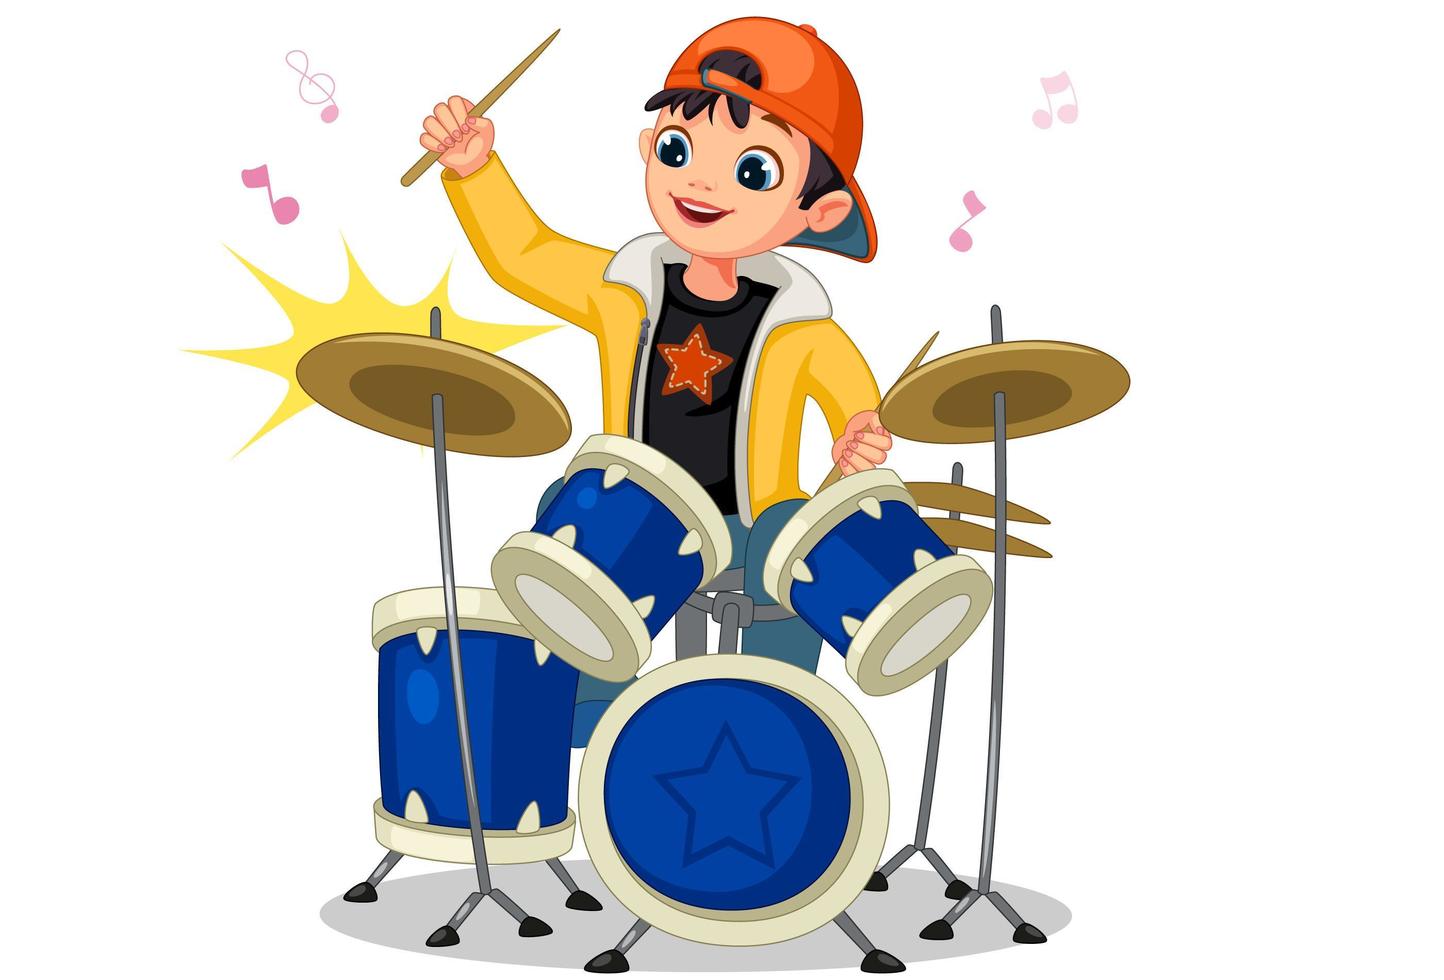 Little boy playing drum set vector